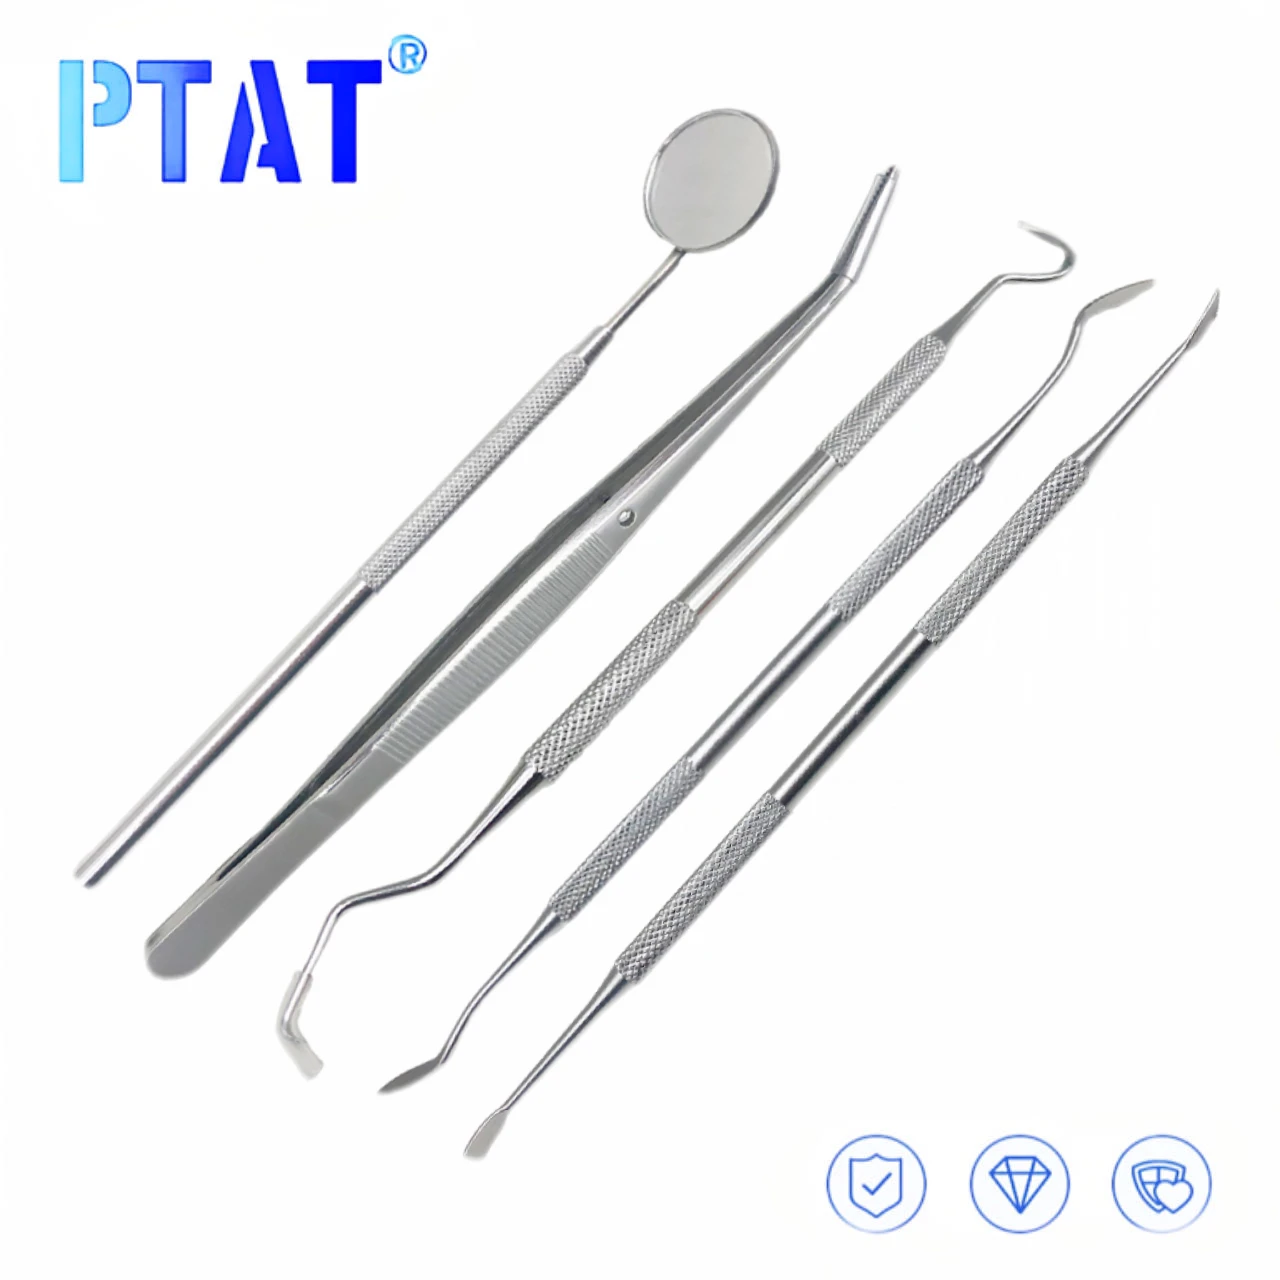 

Dental Mirror Stainless Steel Dental Dentist Prepared Tool Set Probe Tooth Care Kit Instrument Tweezer Hoe Sickle Scaler